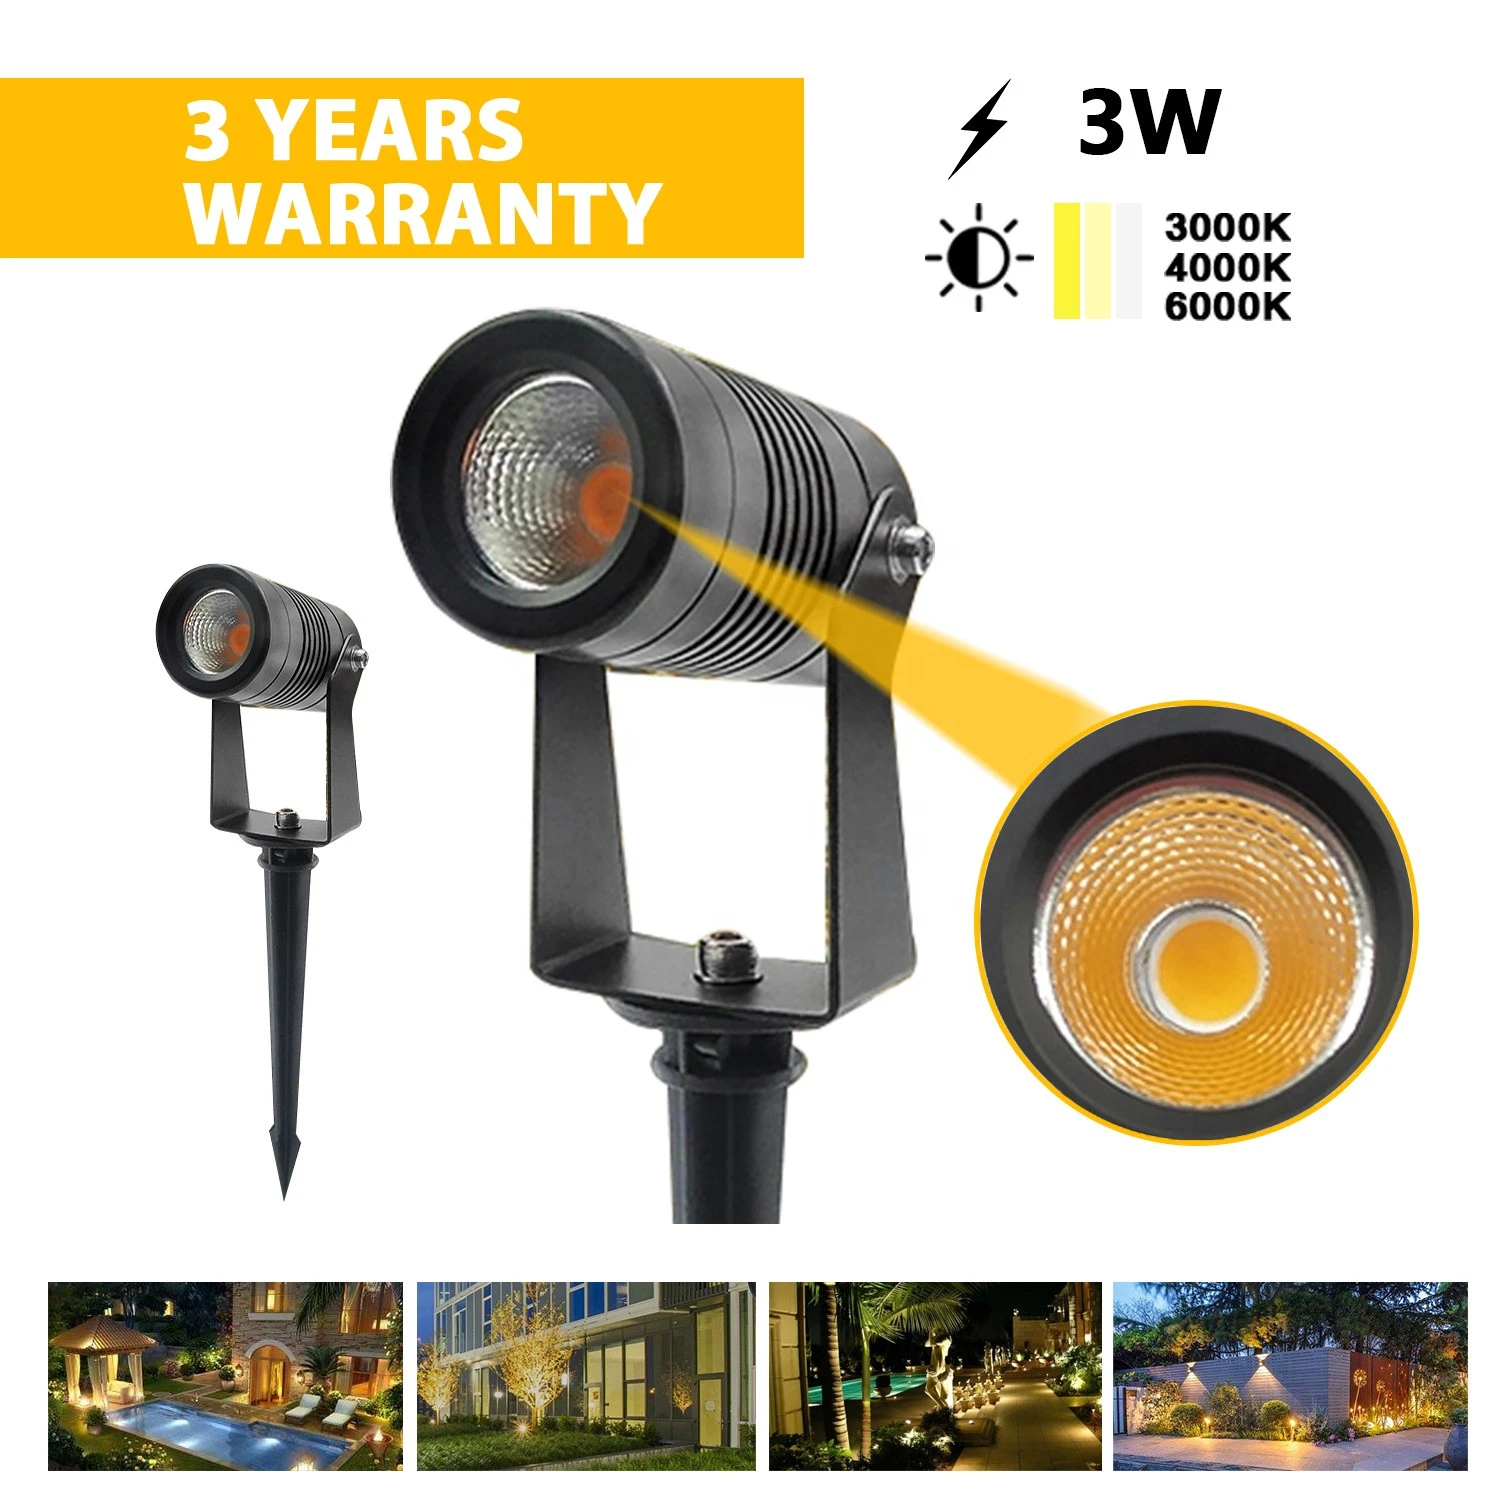 SYA-701 Waterproof Ip65 Outdoor Lamp Landscape Lighting spotlight led spike light